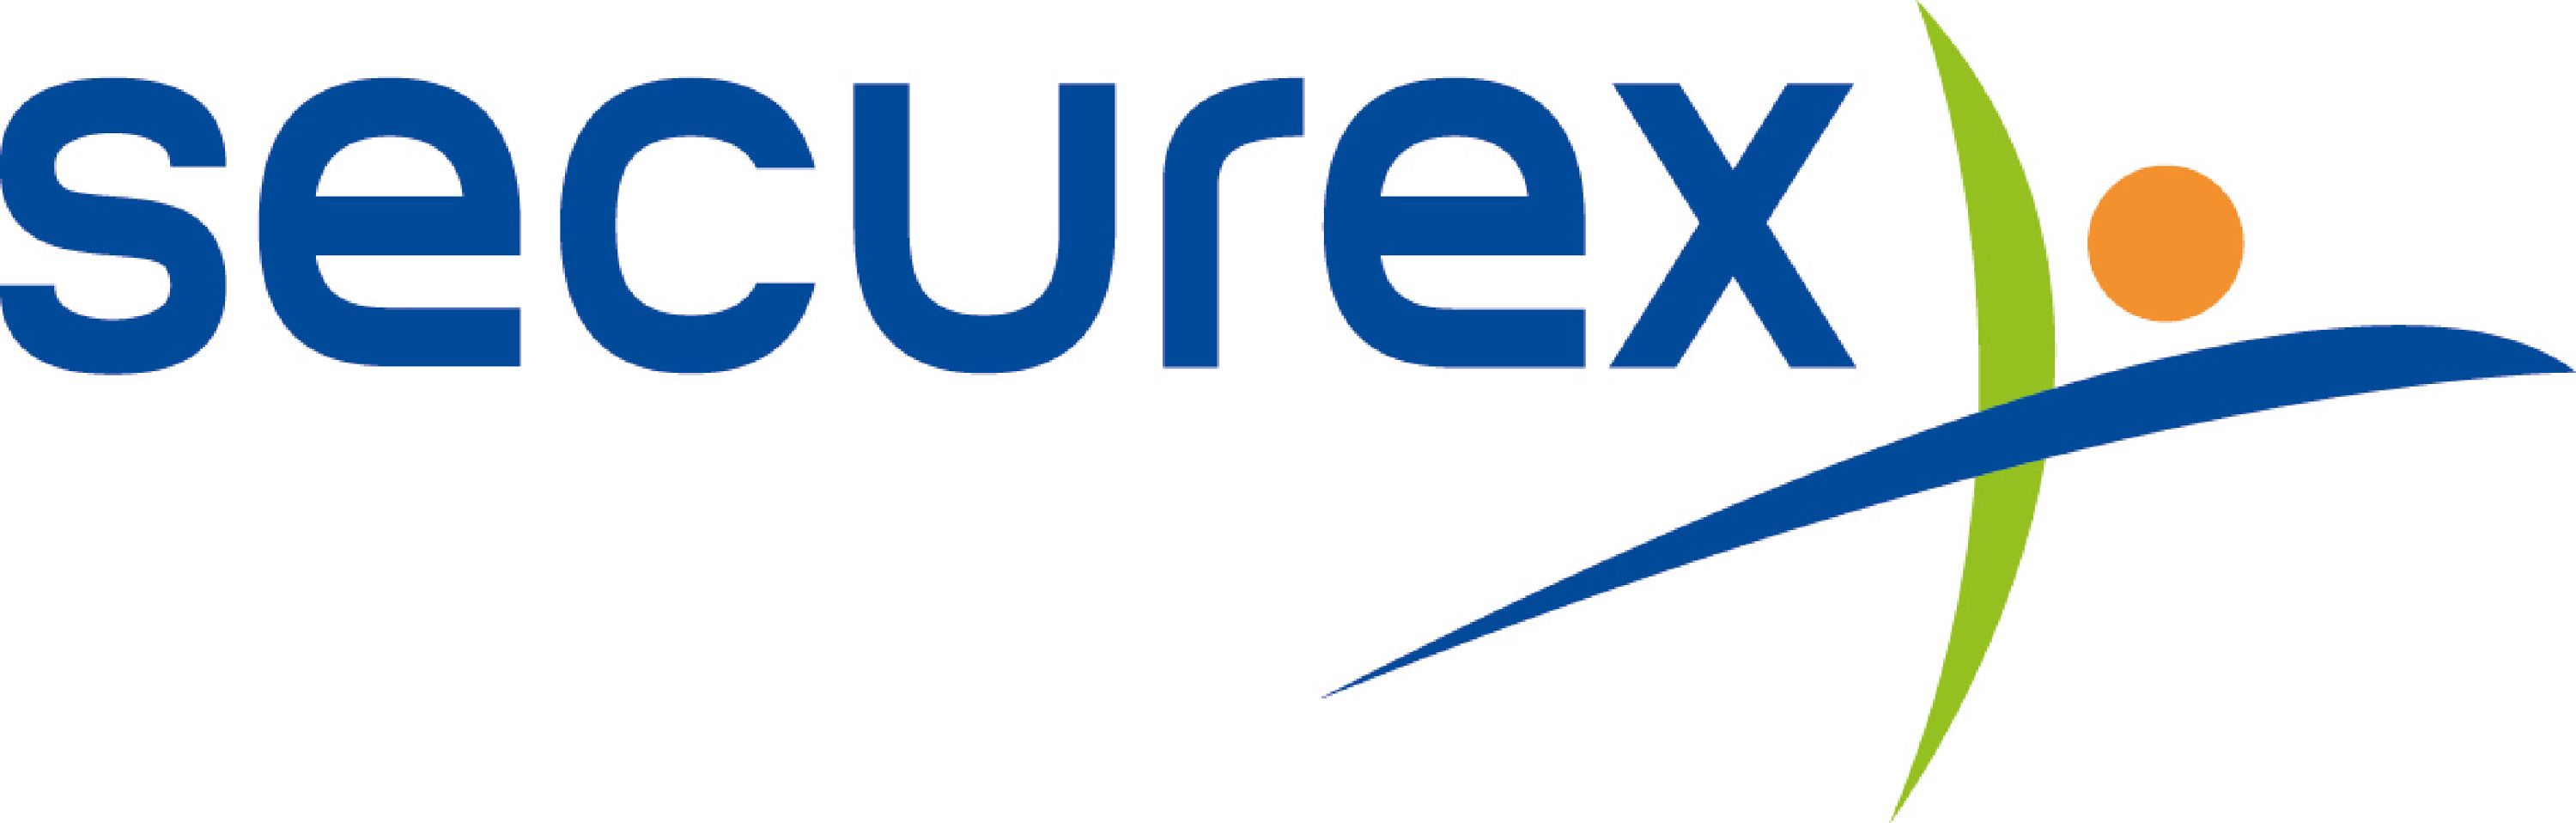 logo securex